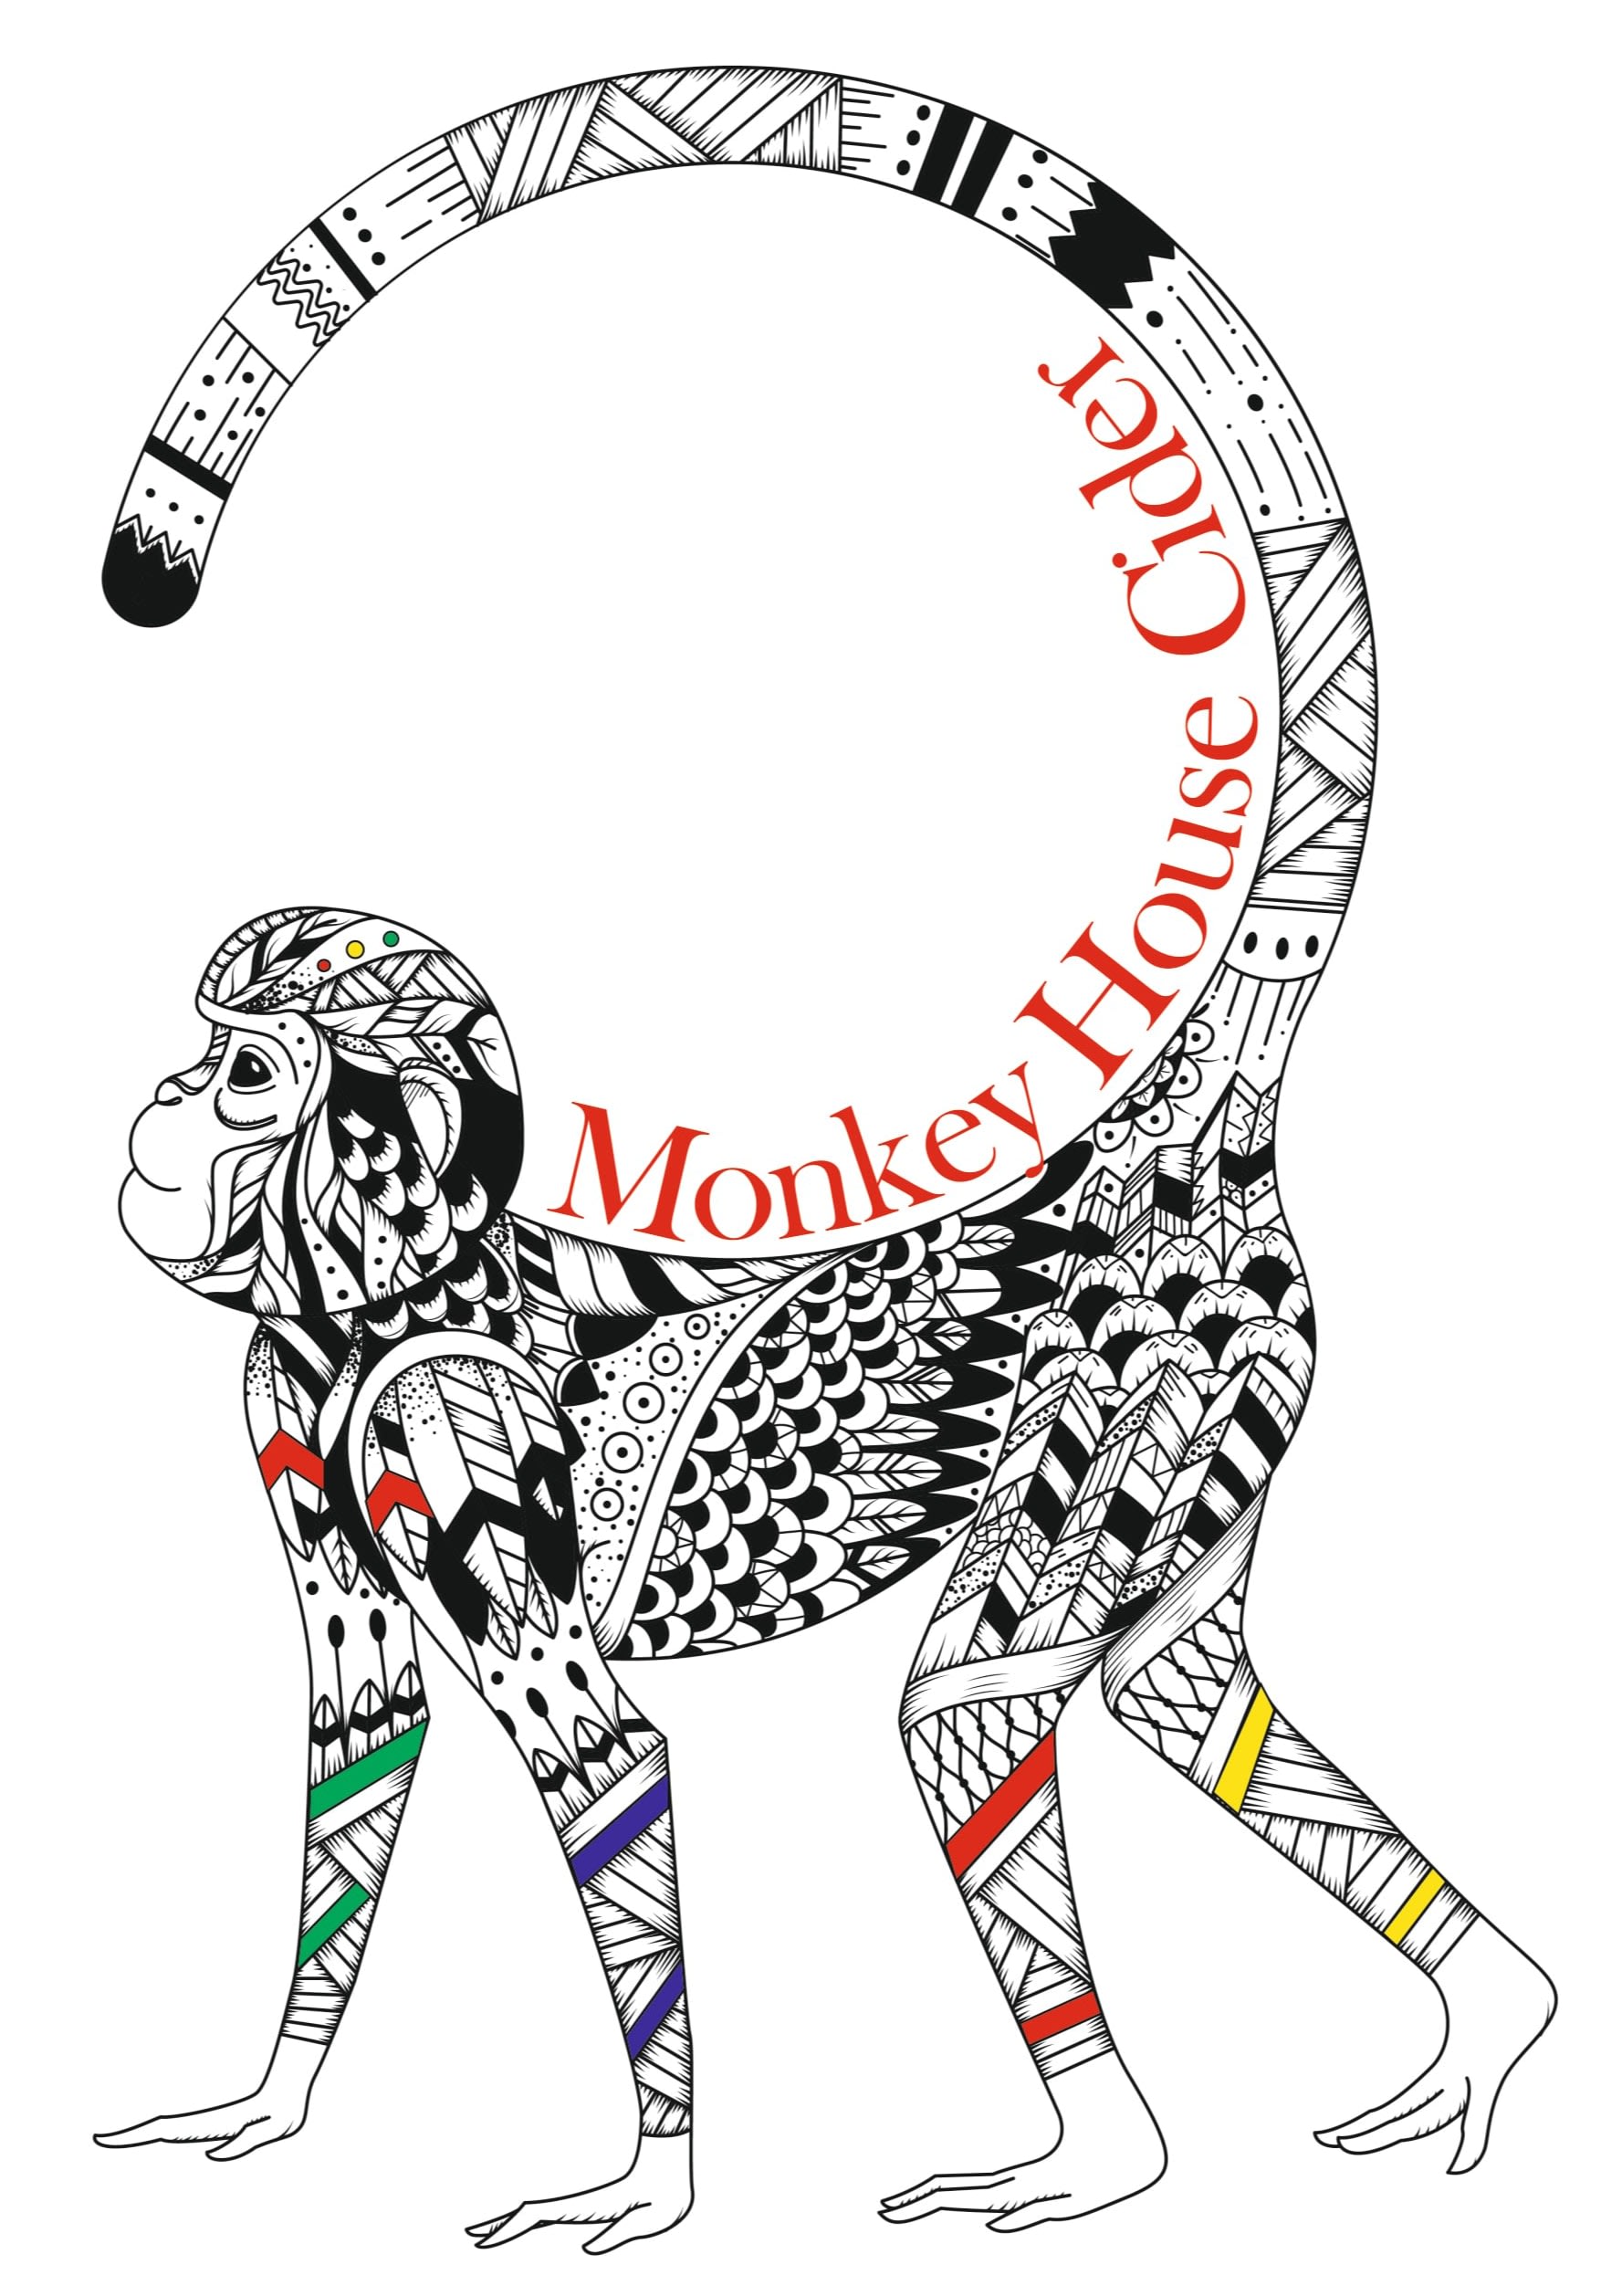 Monkey House Cider Ltd